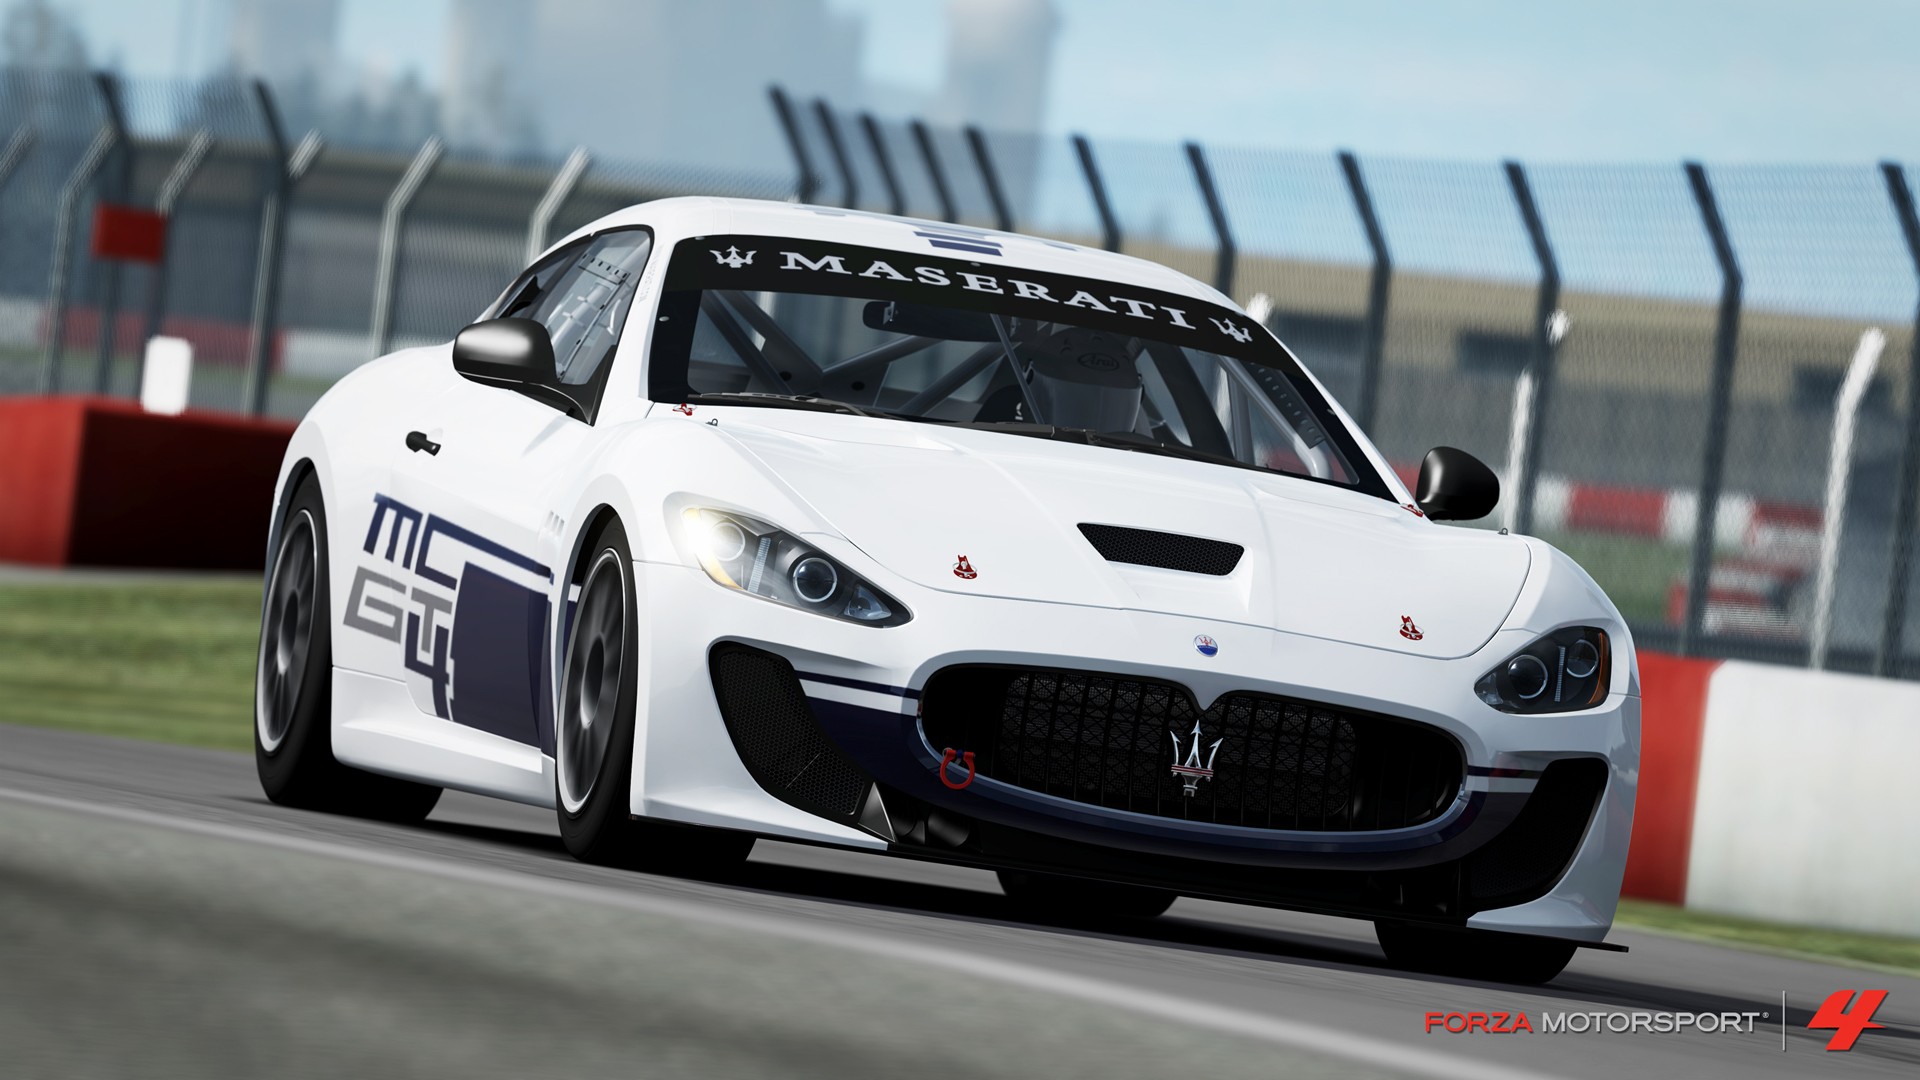 General 1920x1080 Forza Motorsport 4 car video games Maserati GranTurismo Maserati white cars racing vehicle Turn 10 Studios